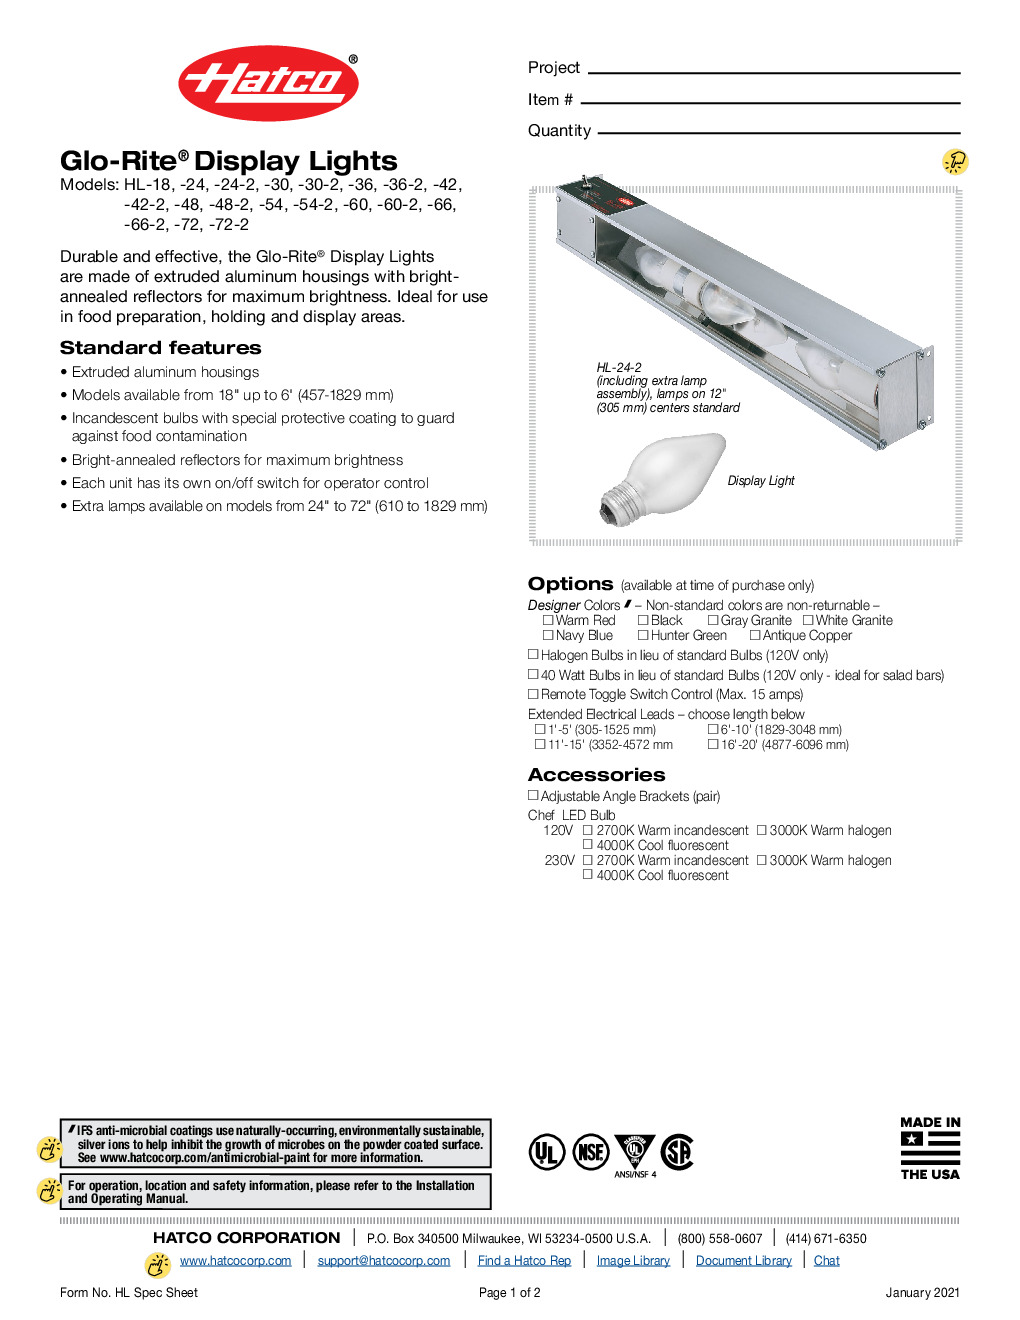 Hatco HL-36-120-QS for Display Light Fixture